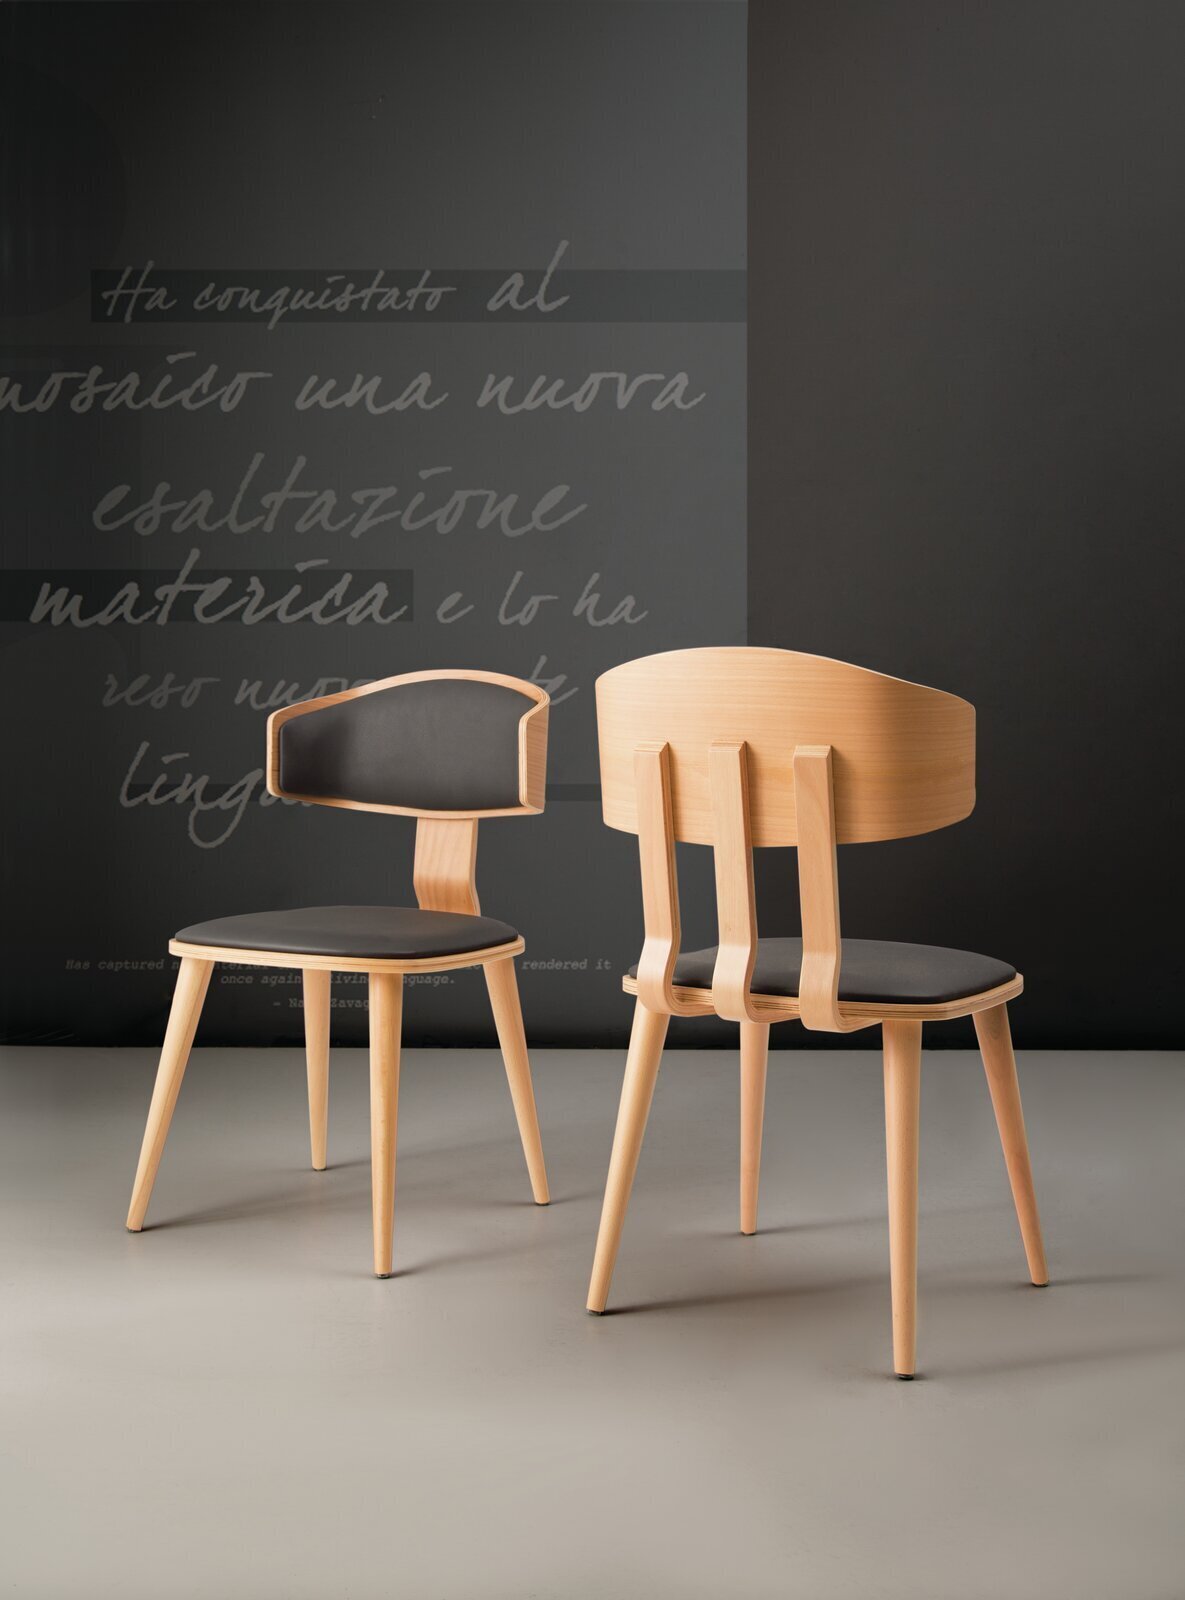 Striking Modern Dining Chair Design